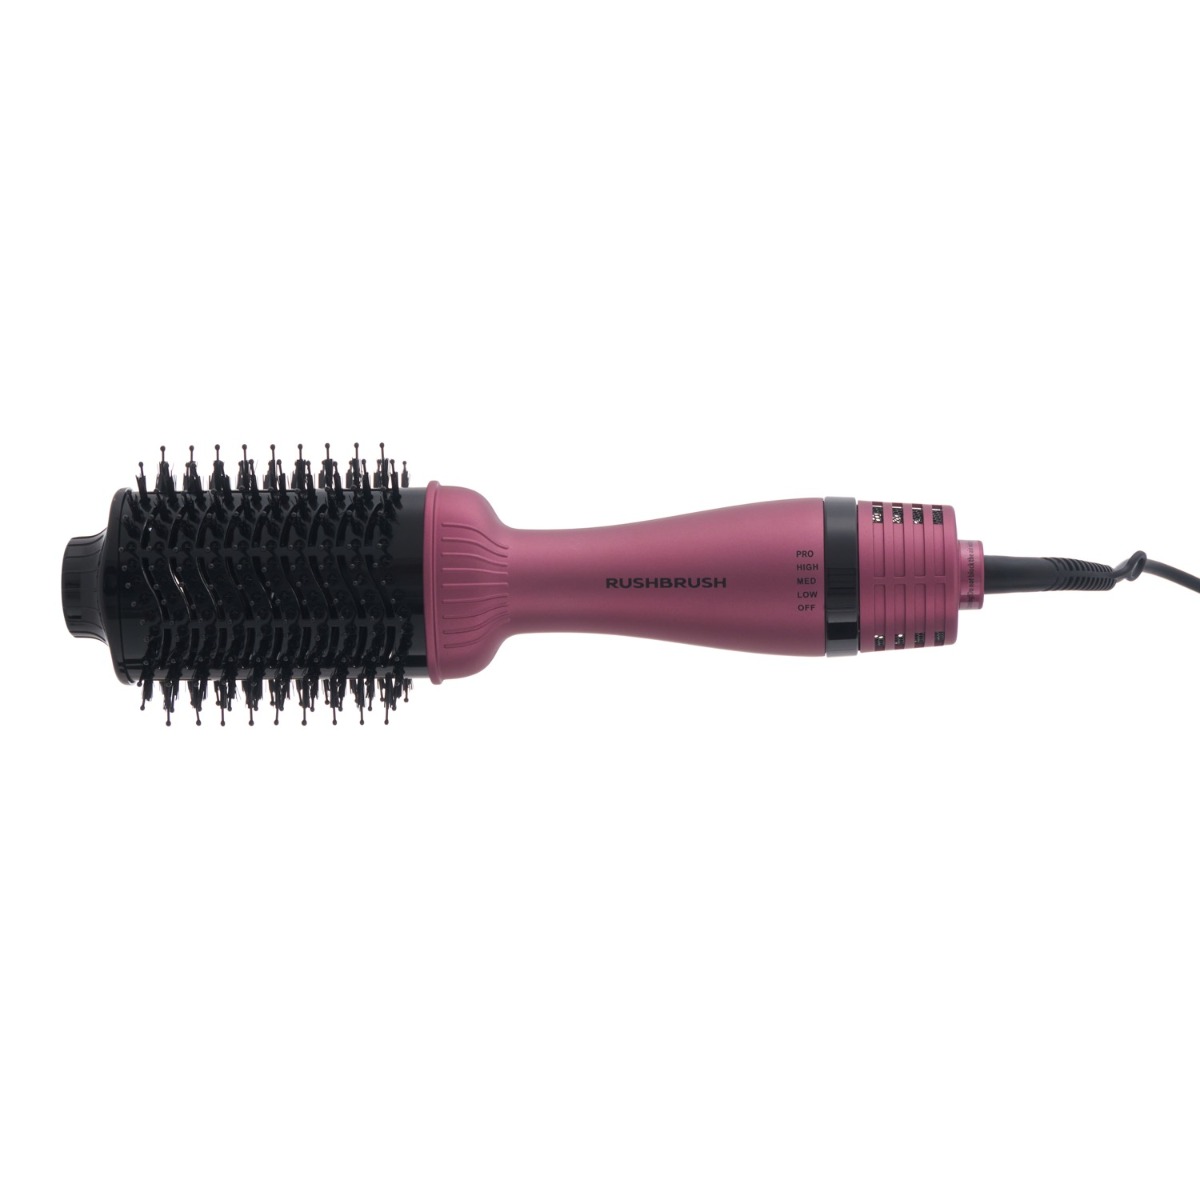 Rush Brush V3 Pro Ceramic Hair Straightening Brush, 230 Degree - Raspberry